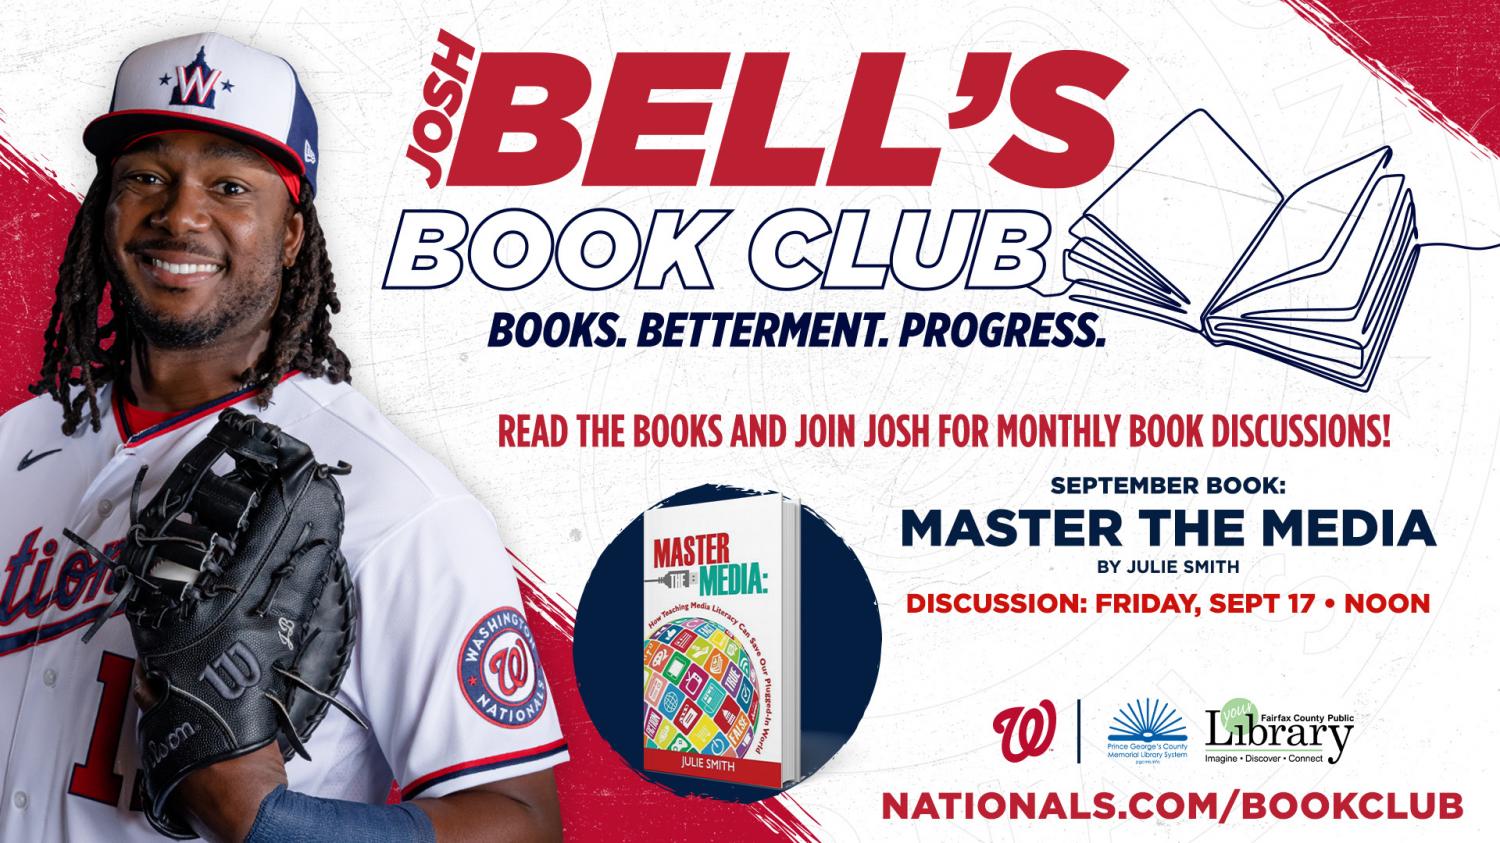 Josh Bell's Book Club